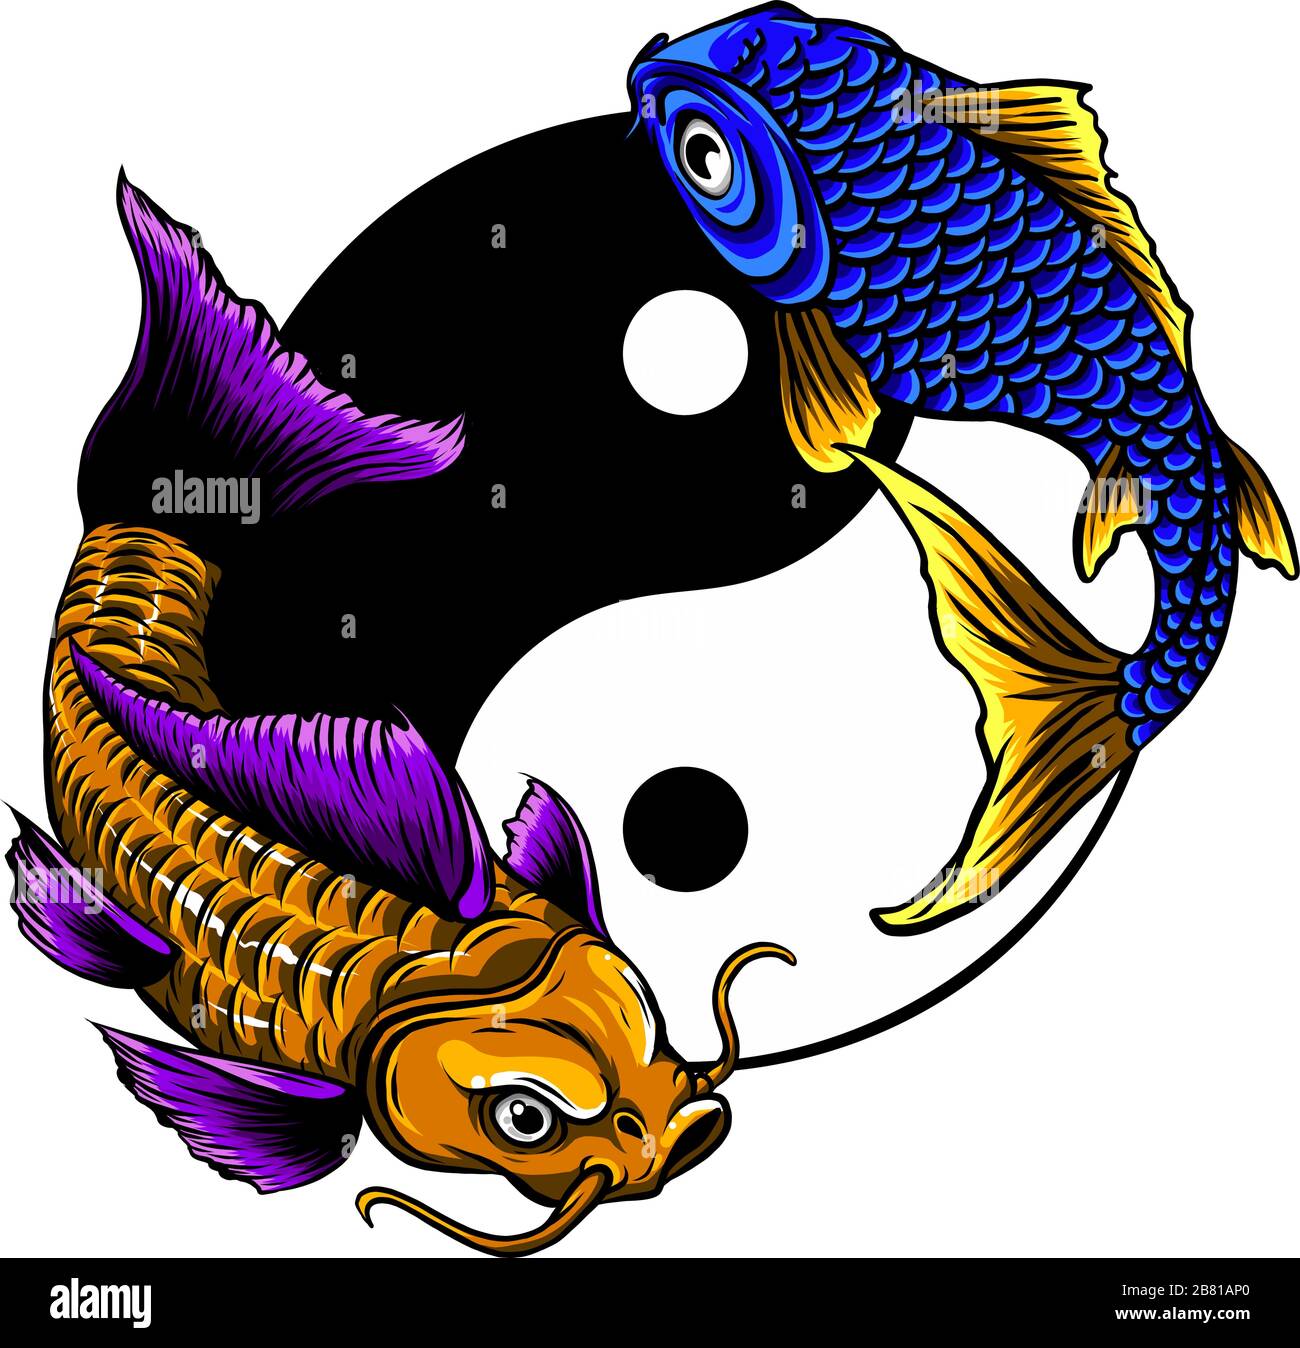 Yin yang symbol of harmony and balance with koi fish. Stock Vector